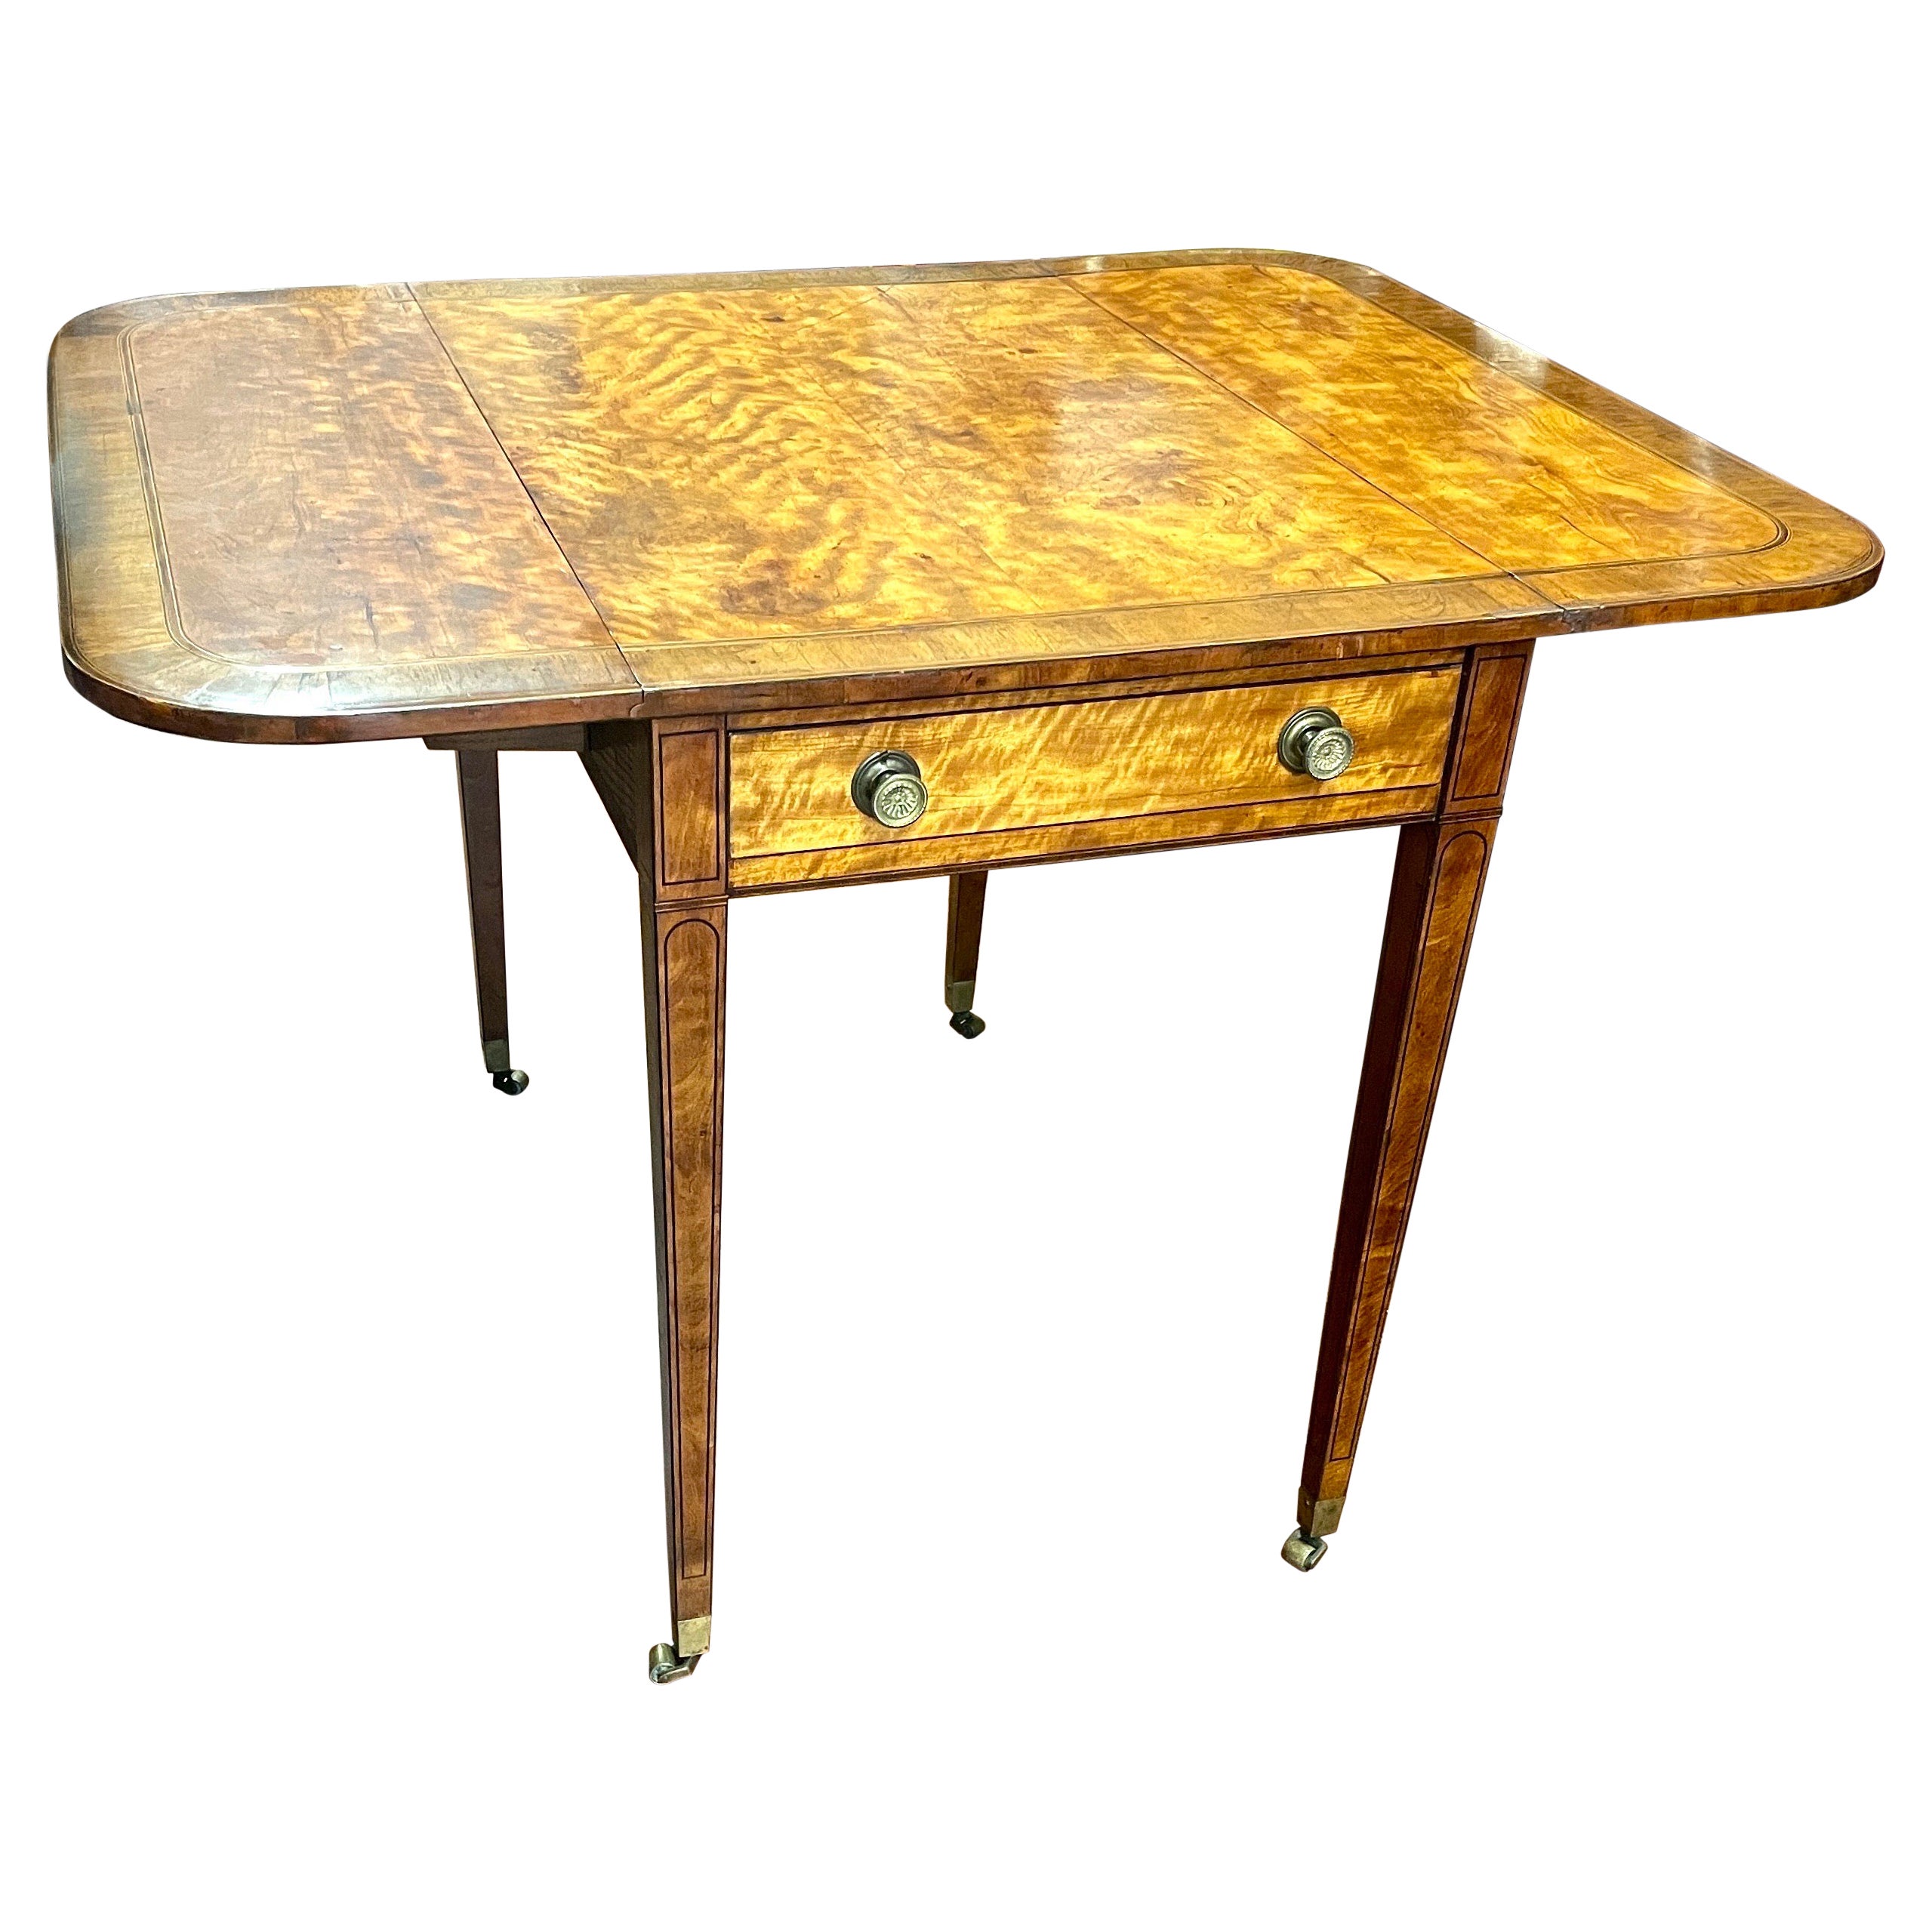 Rare Antique English Geo. III Regency Inlaid Satinwood Drop-Leaf Pembroke Table